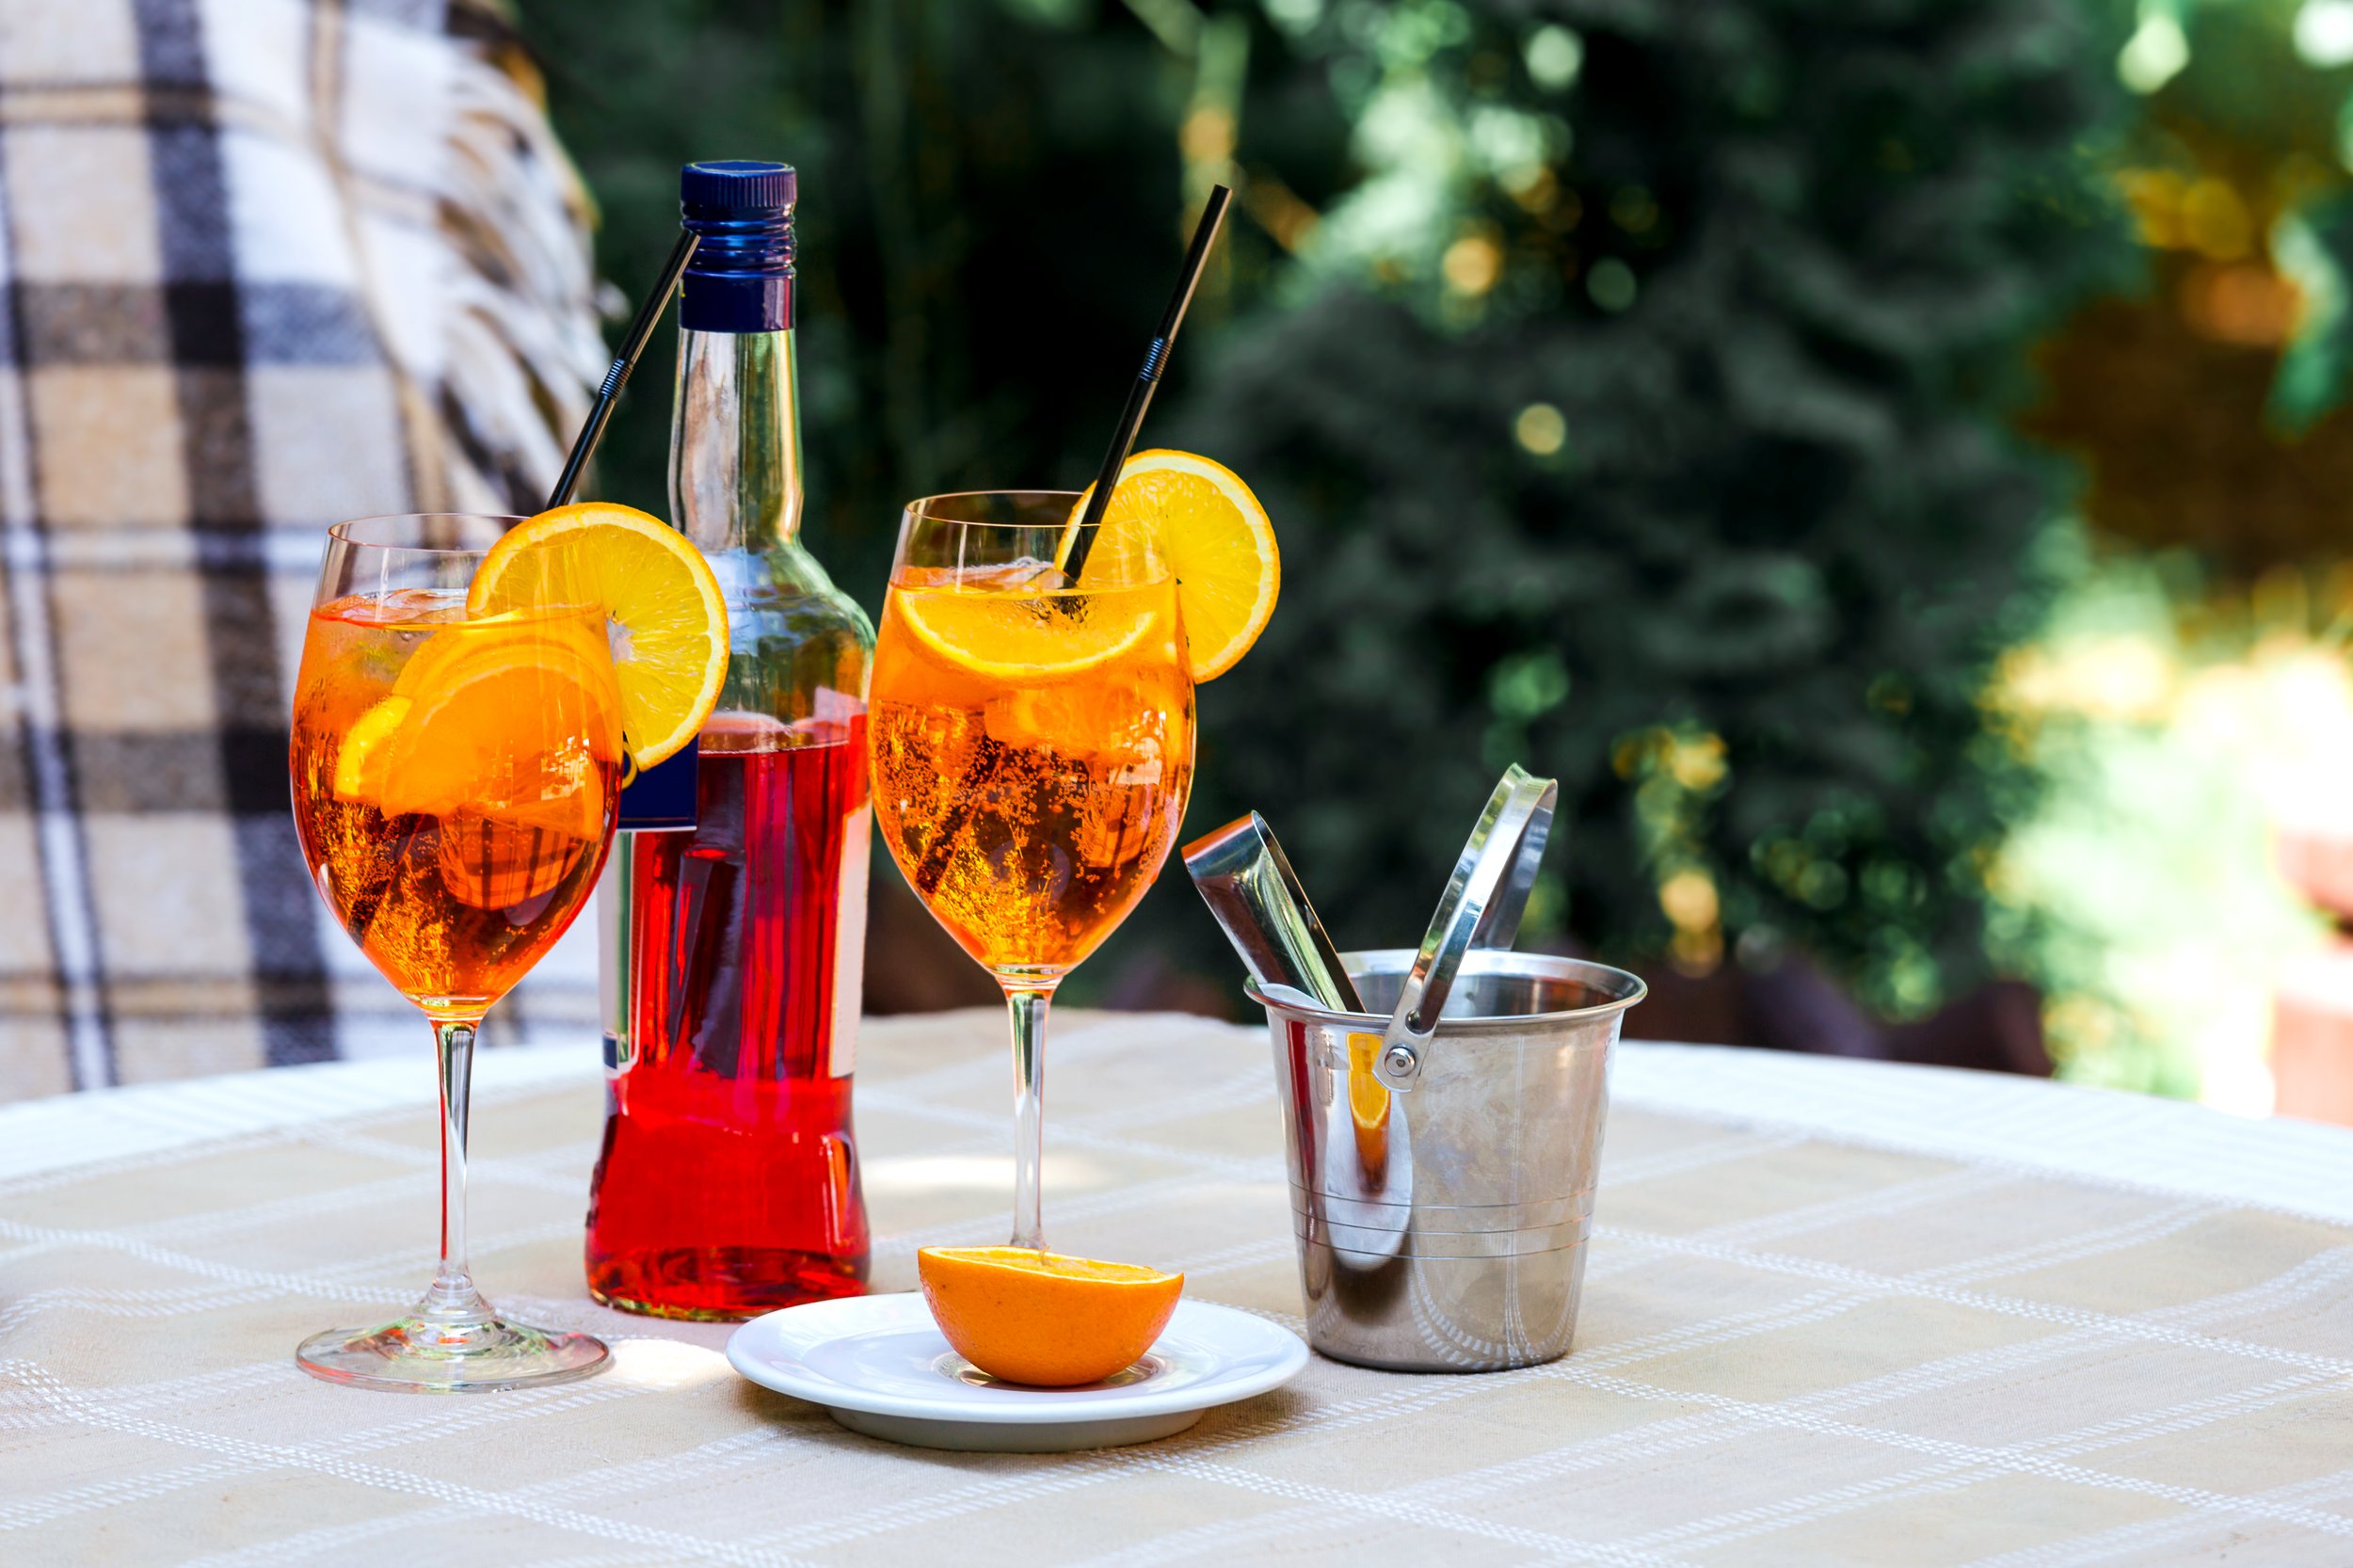 aperol-spritz-cocktail-glass-plaid-table-leaves-sun-orange-ice-bucket-shadow-sunlight.jpg